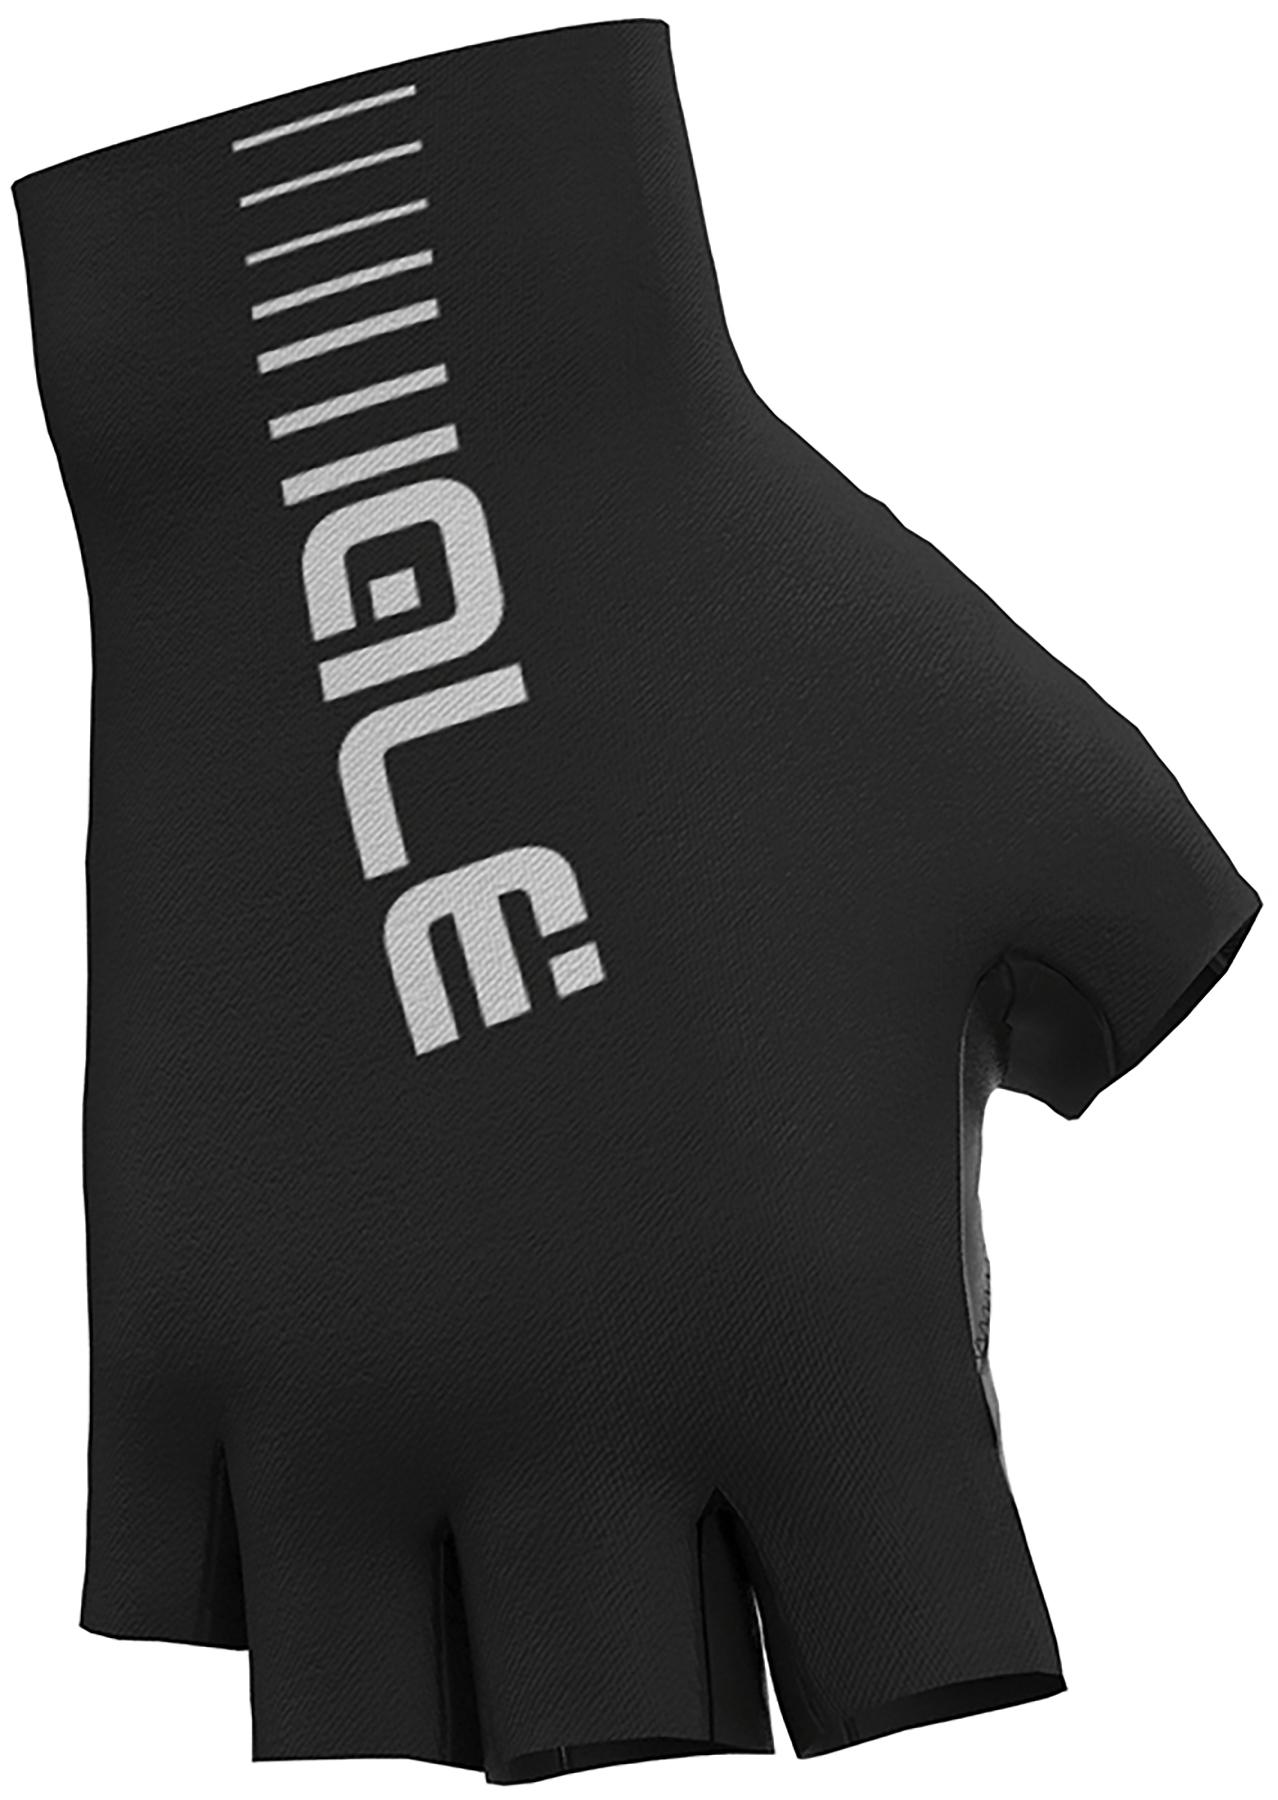 Al Sunselect Crono Gloves  Black/white